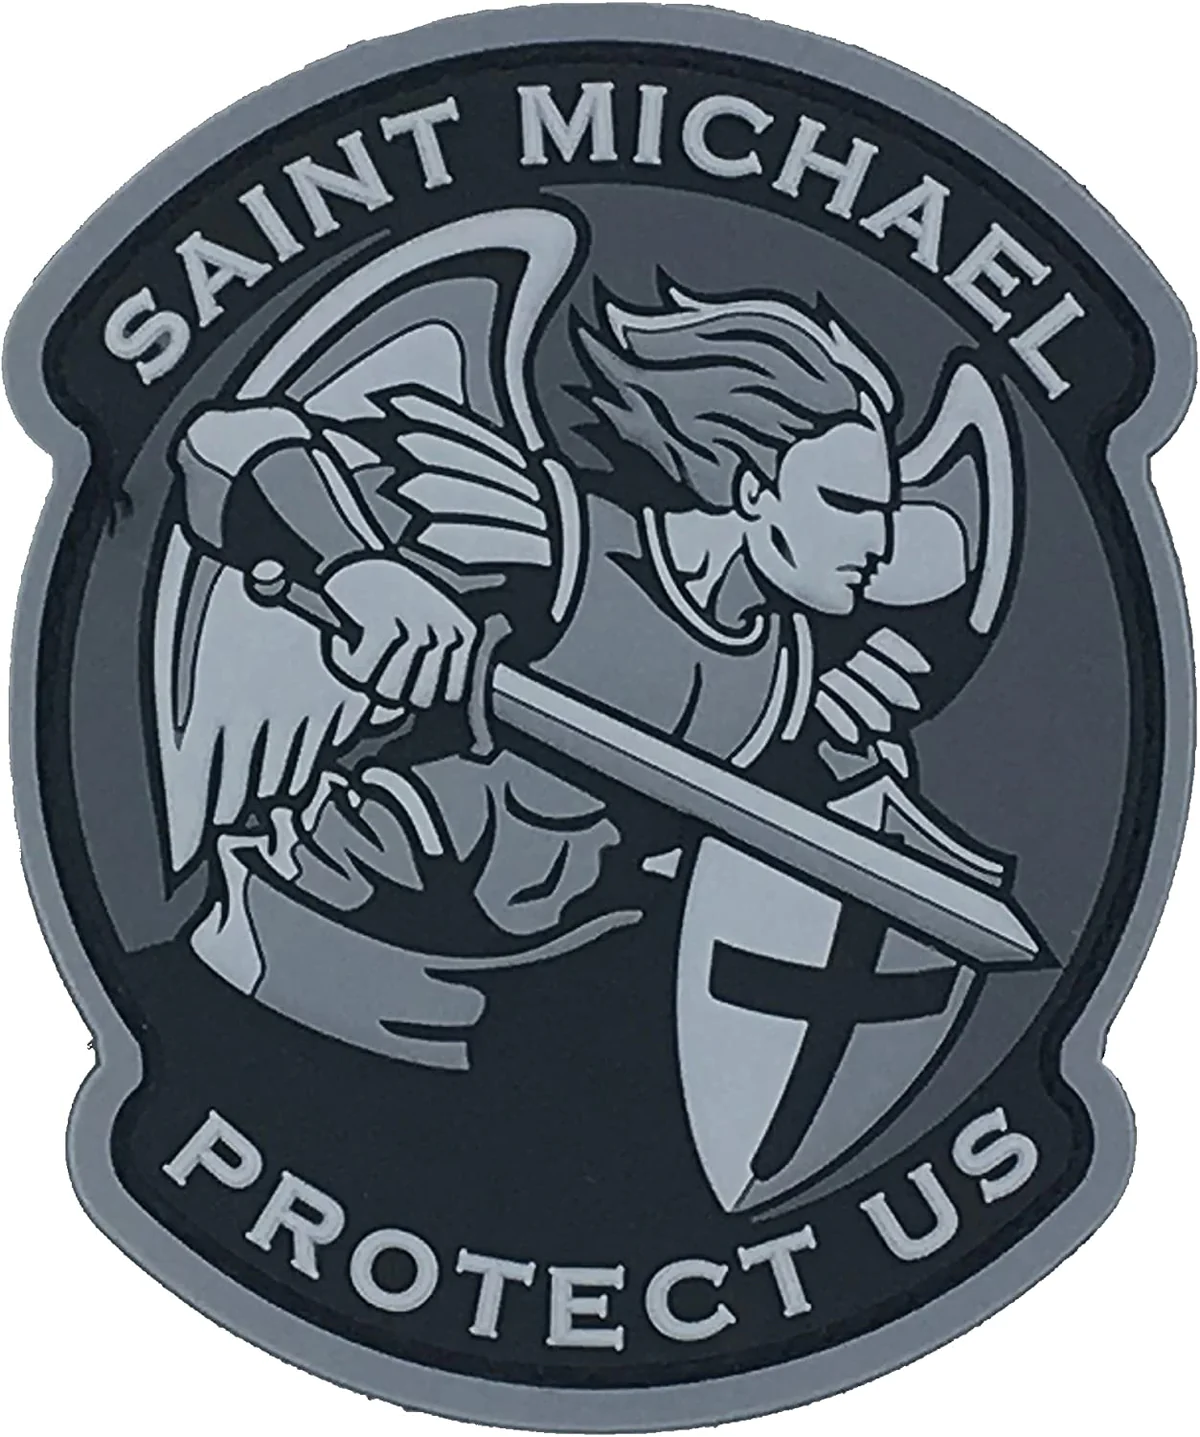 ST. MICHAEL PROTECT US pvc rubber Patch